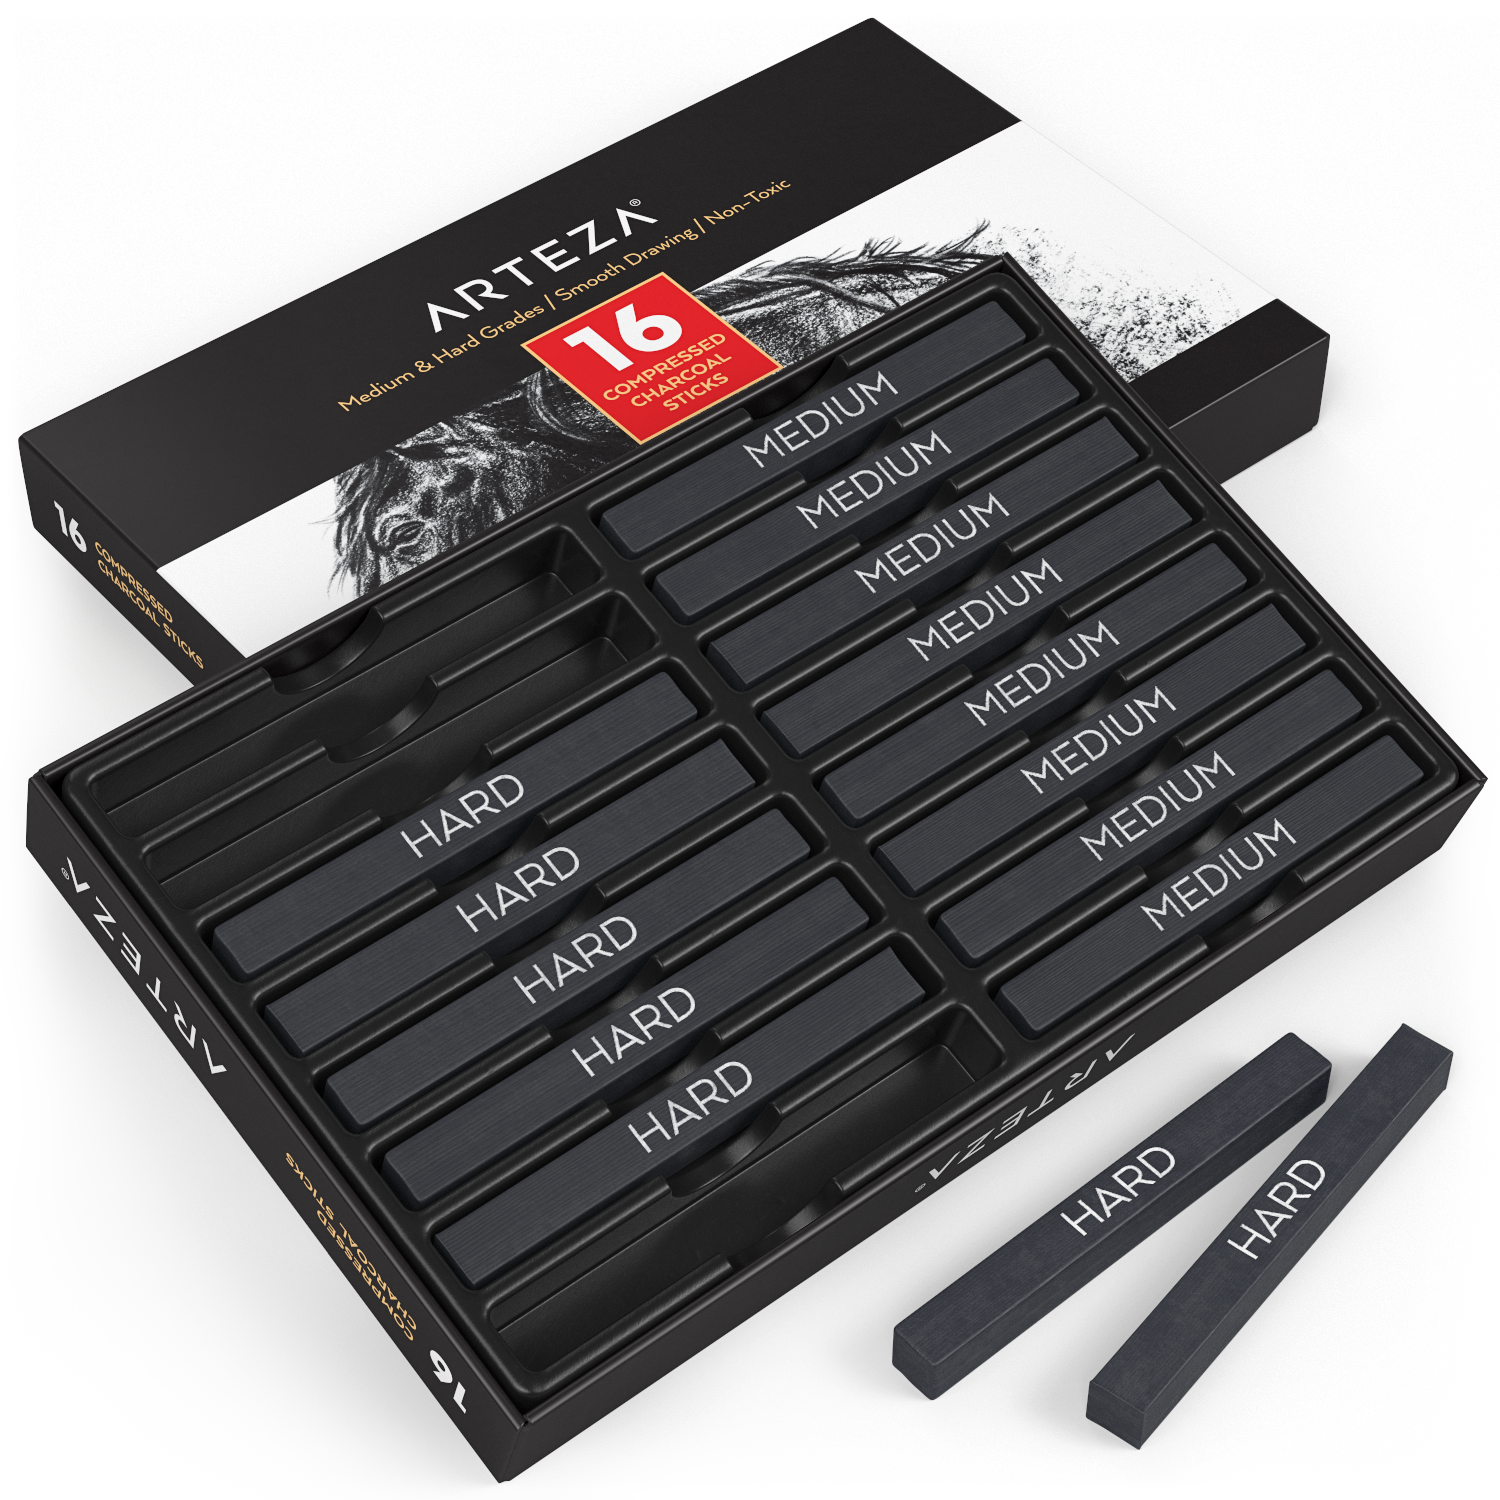 Compressed Charcoal 12 Stick Set – Pentalic